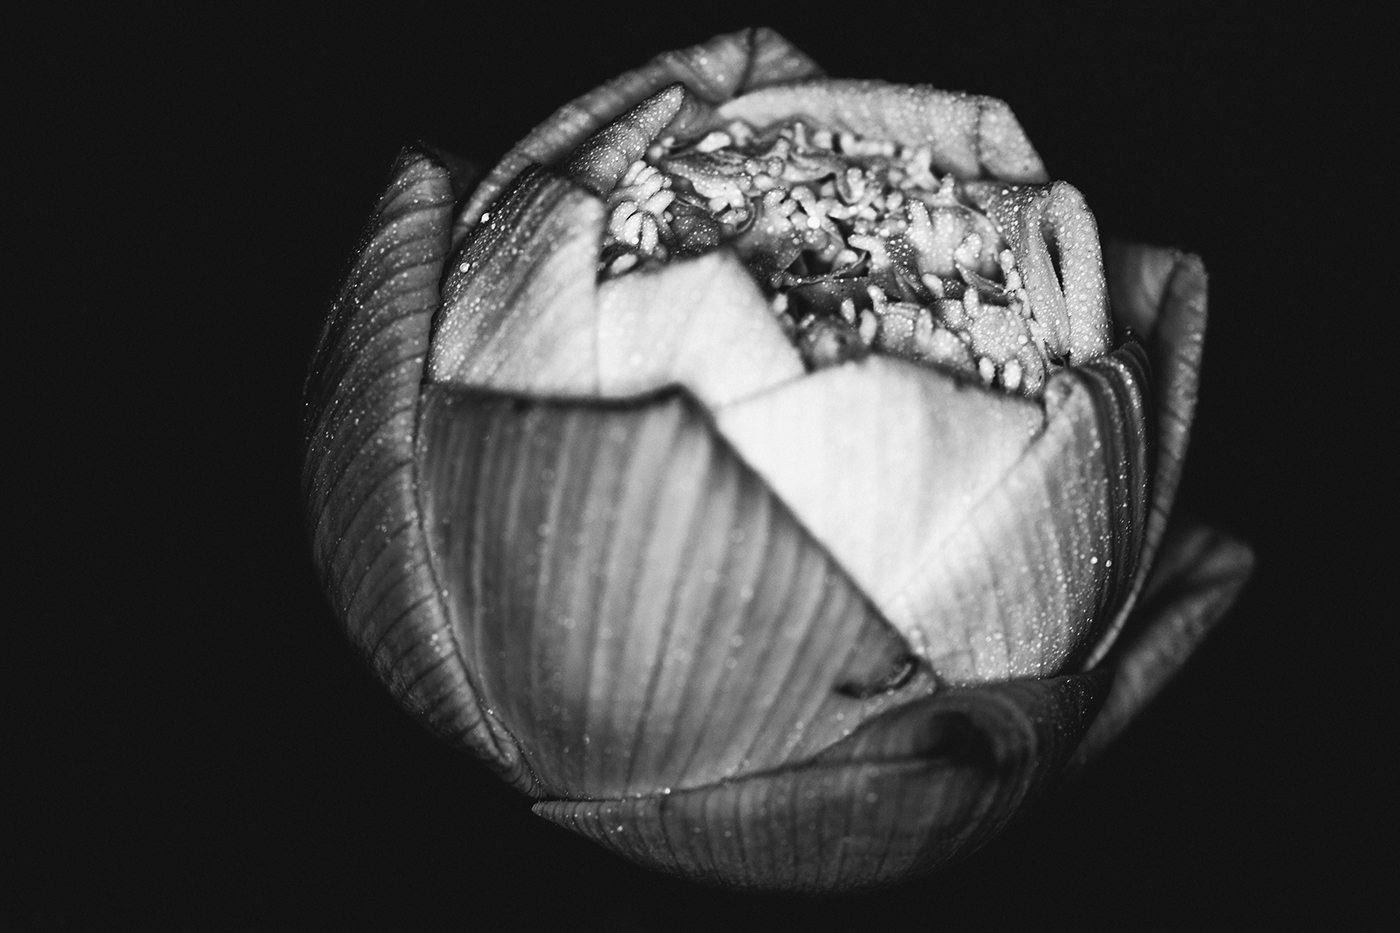 Lotus flower macro Nature b&w close up portrait